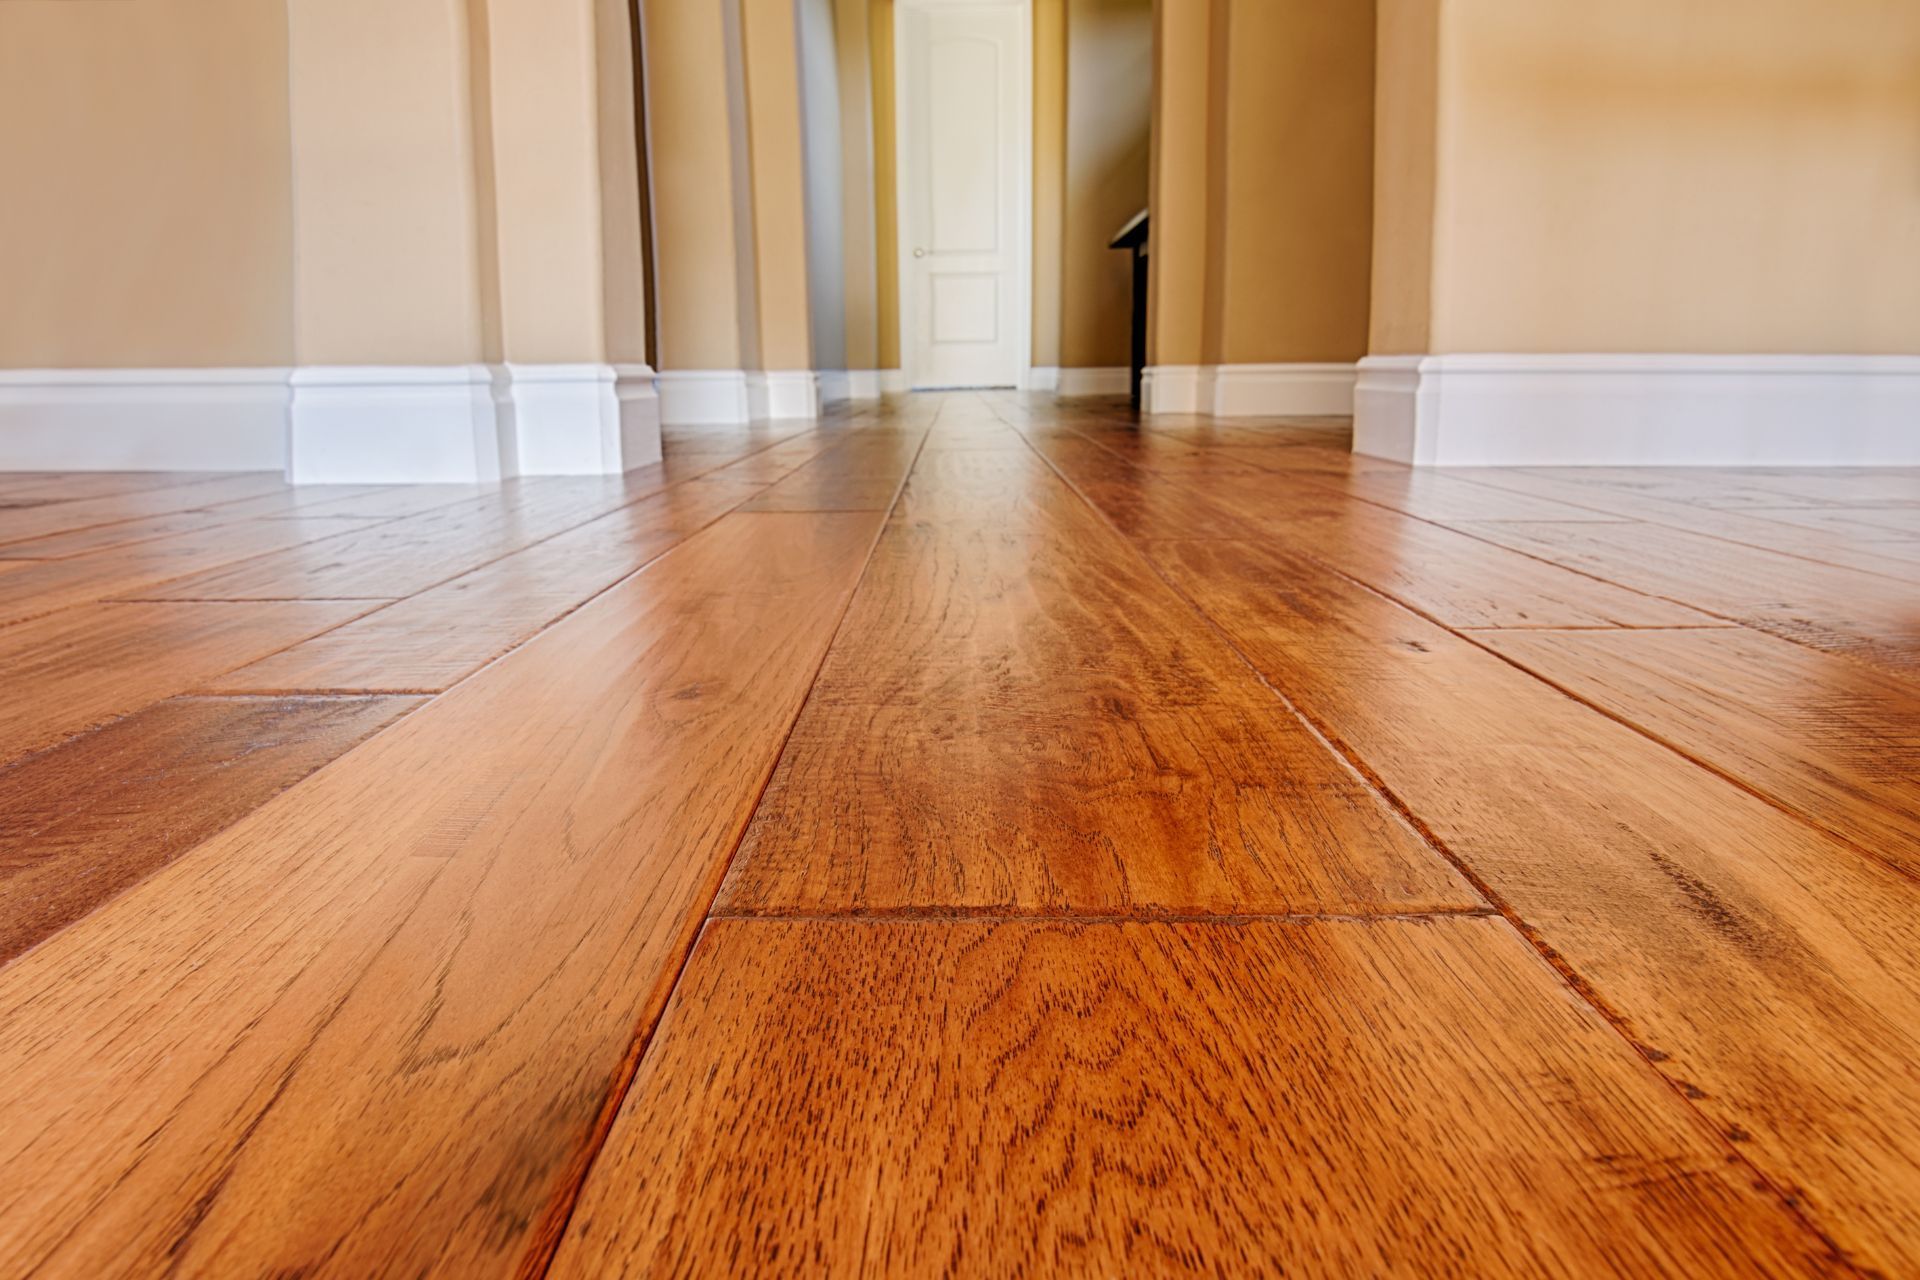 Polished hardwood floor leading to a door, with detailed wood grain.